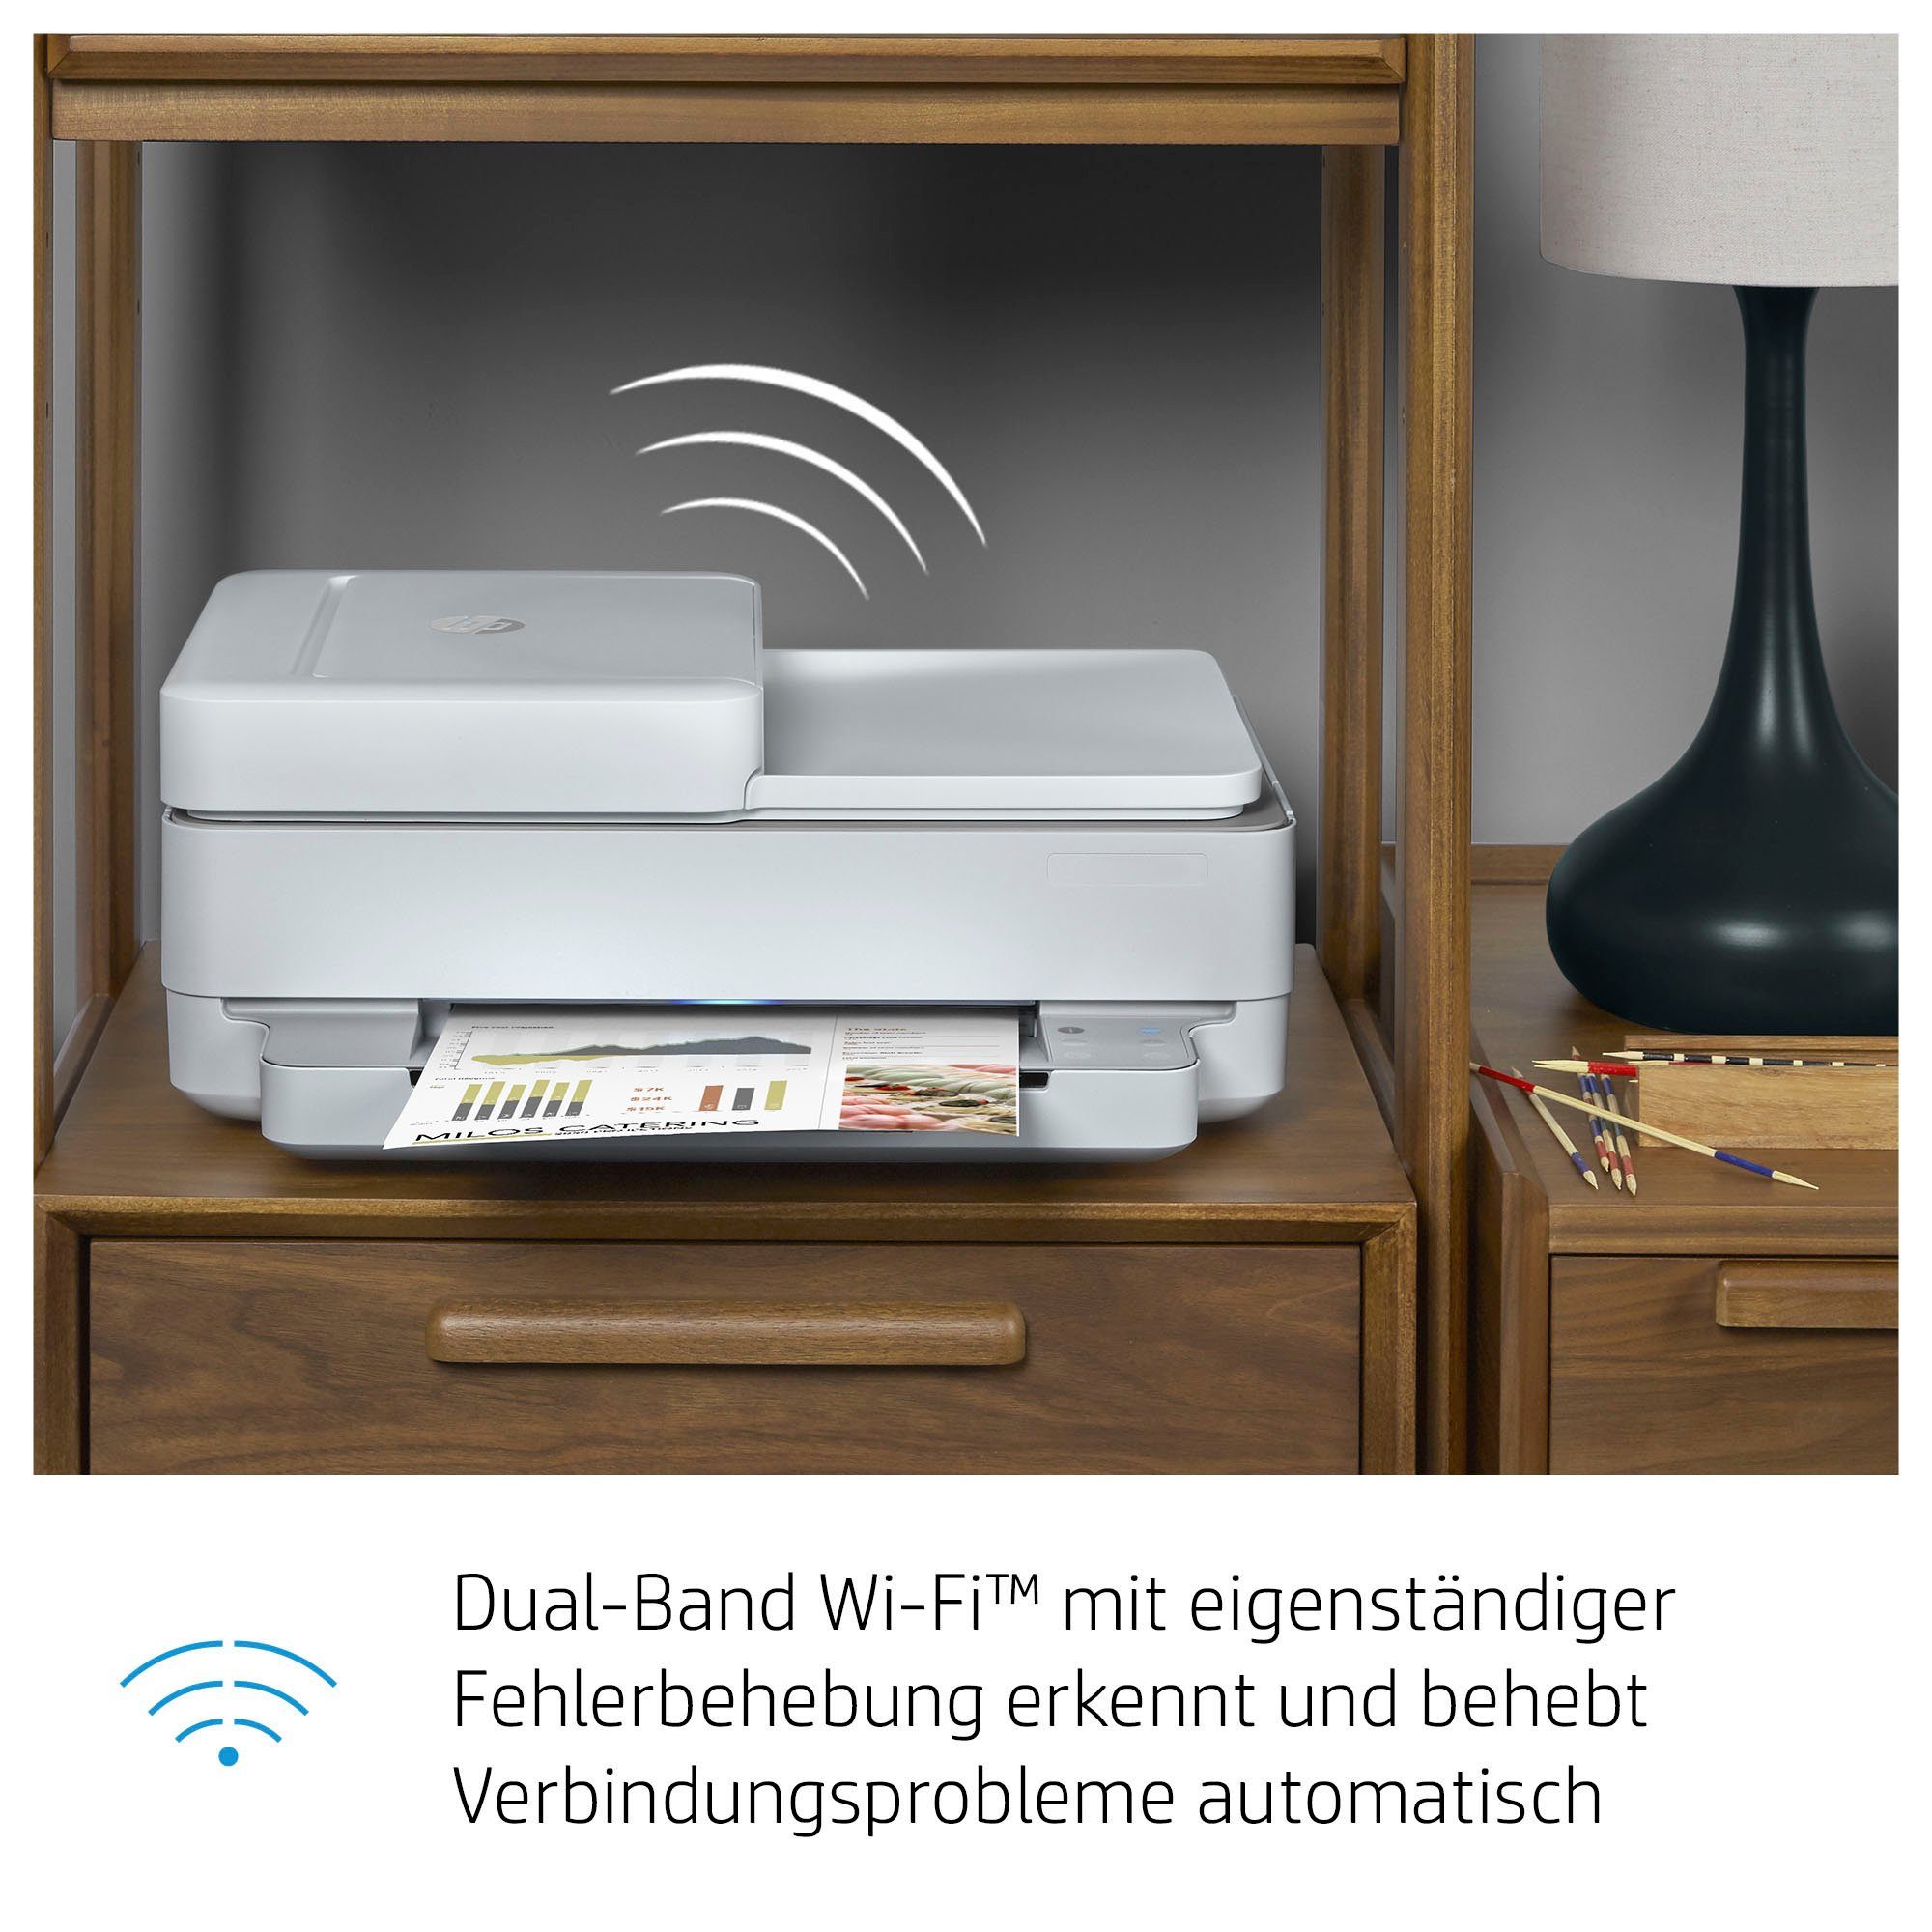 HP ENVY (Wi-Fi), AiO Ink 7ppm HP+ (WLAN color kompatibel) Instant Printer Multifunktionsdrucker, A4 6420e